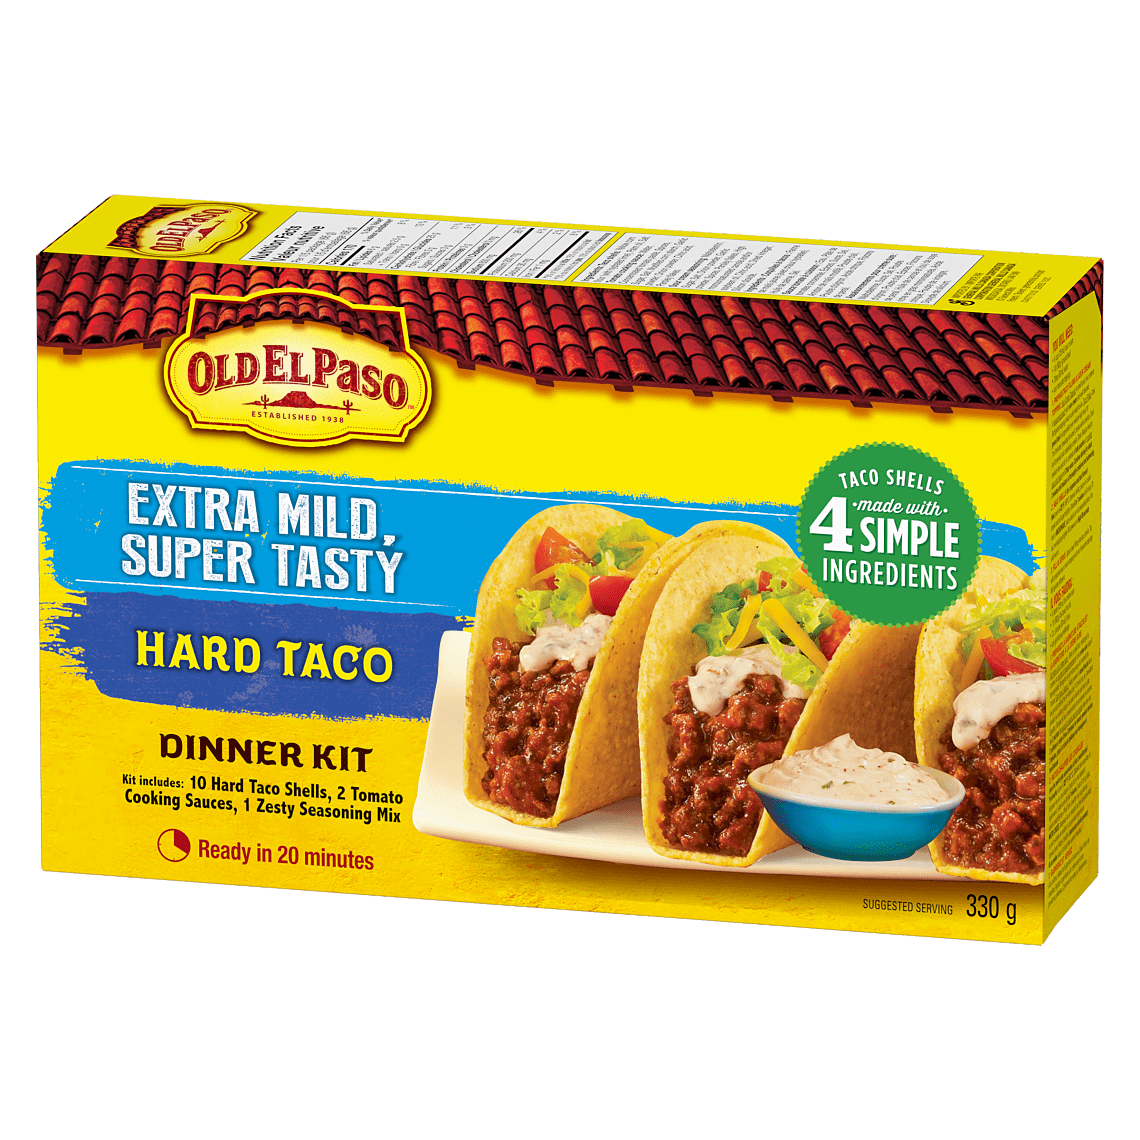 Old El Paso Extra Mild Super Tasty Hard Taco Dinner Kit